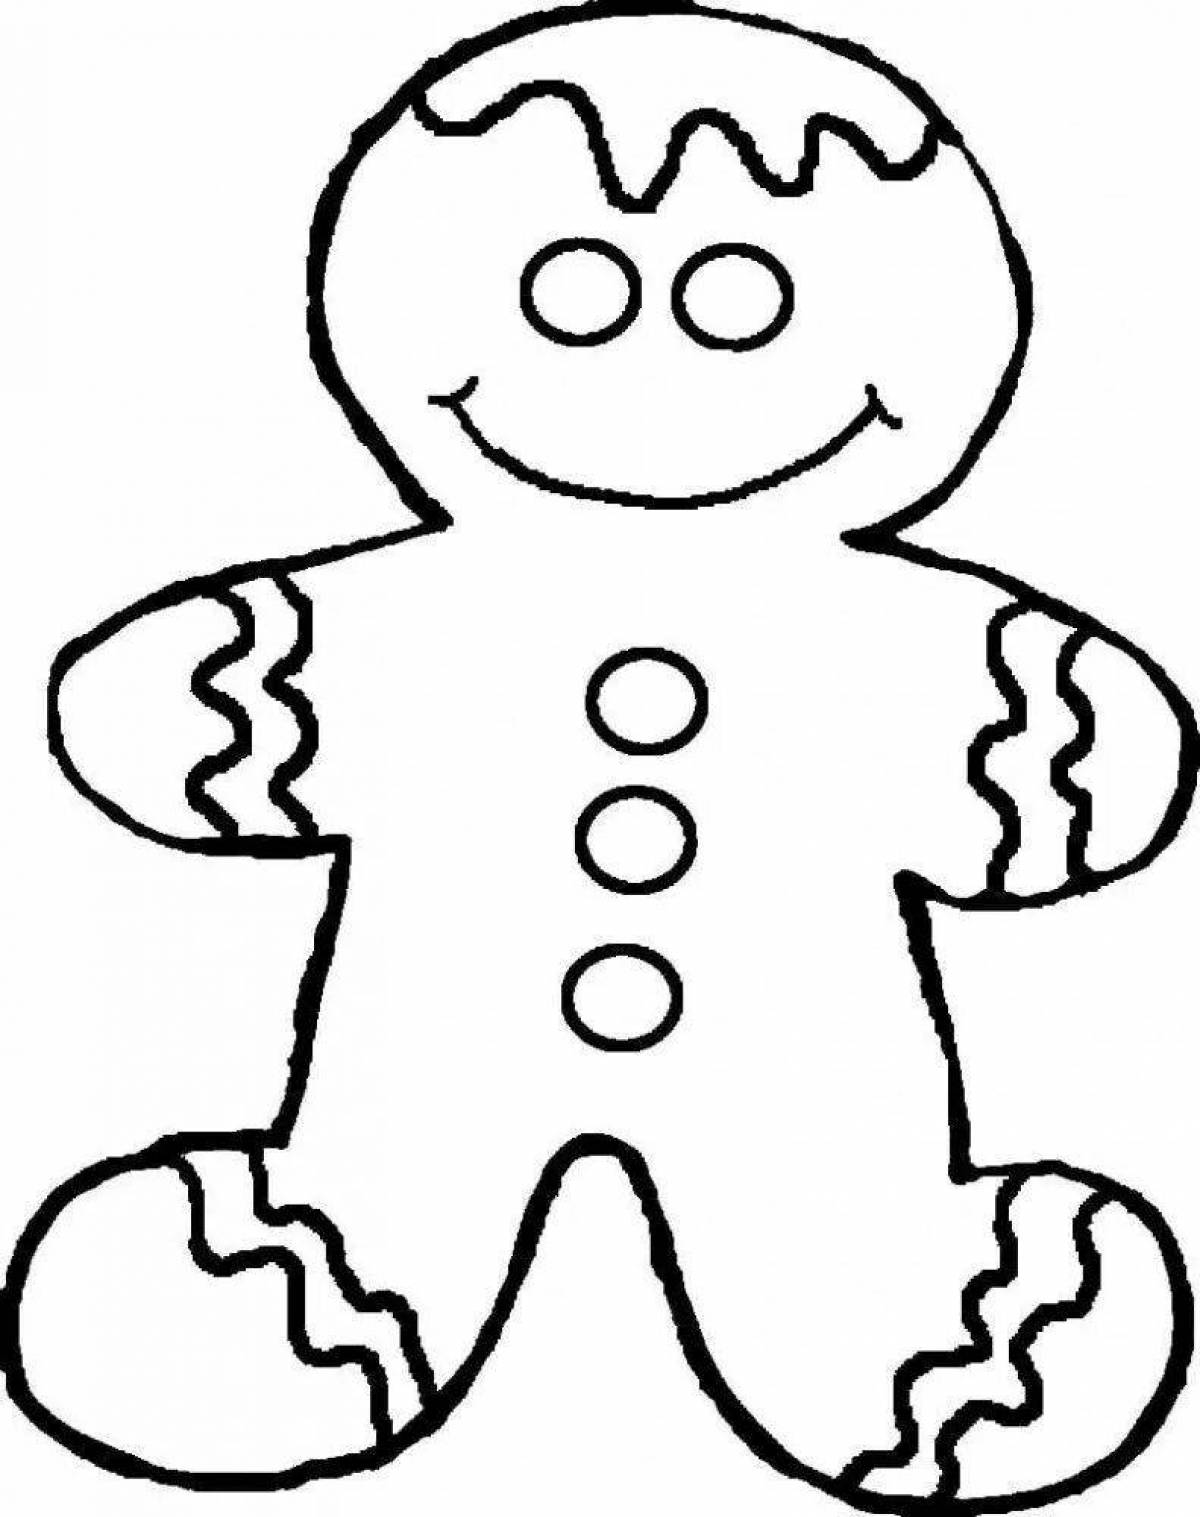 Gingerbread man #13